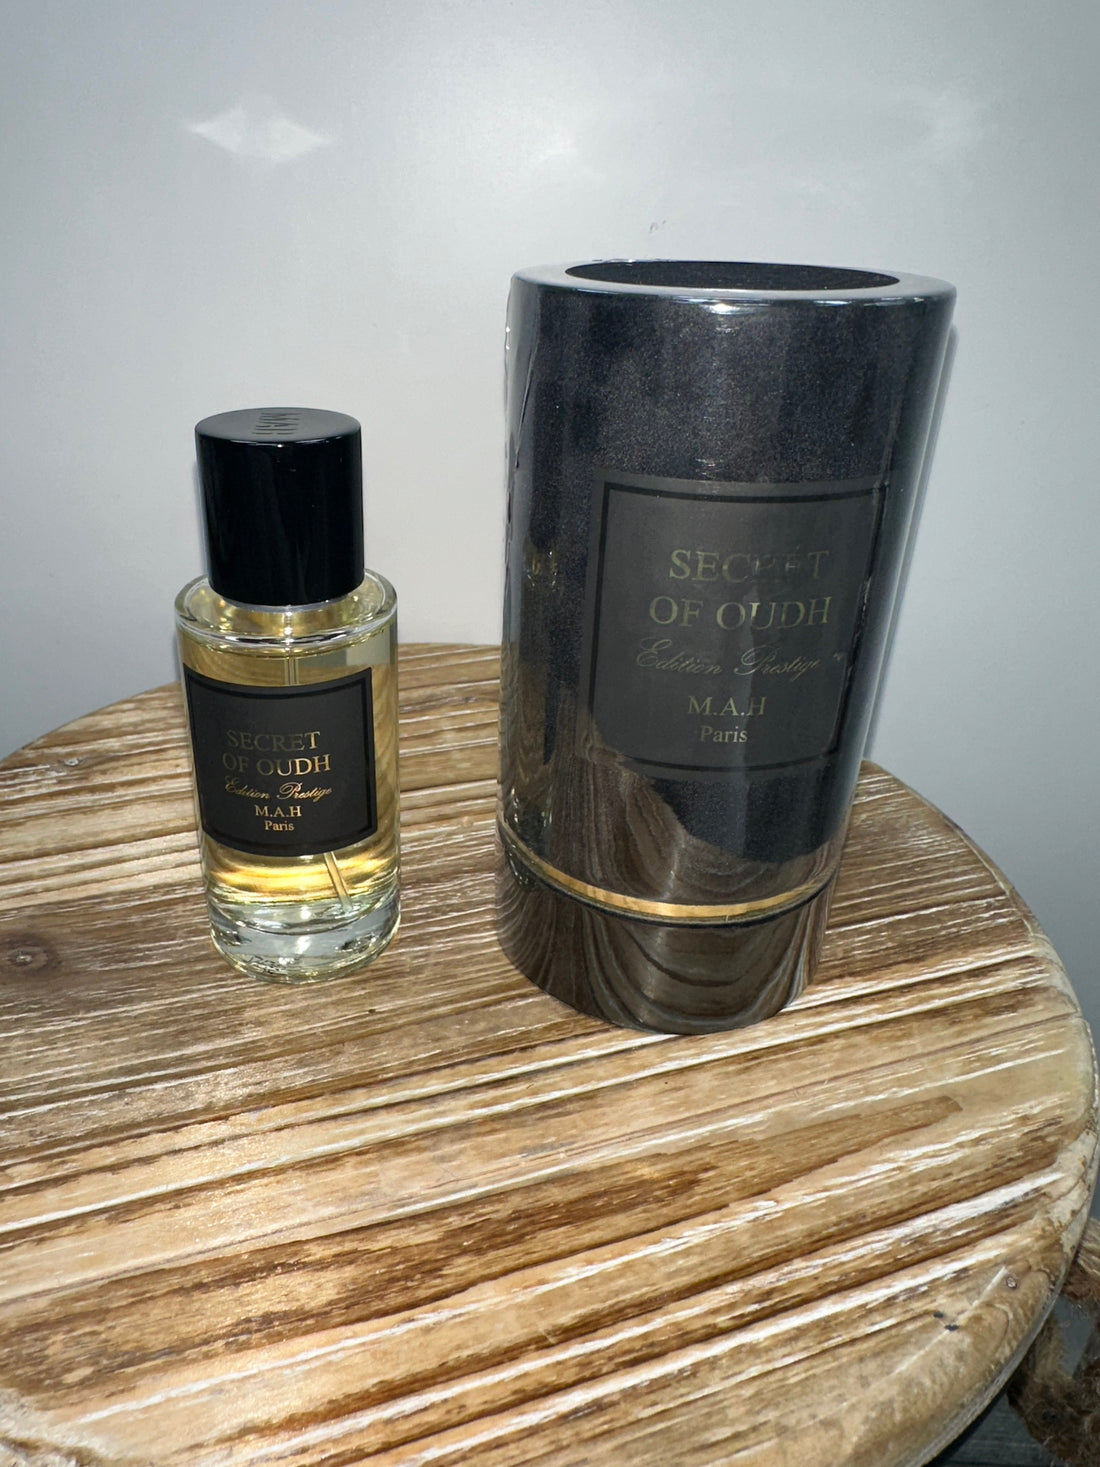 Mah Paris - Secret of oudh perfume